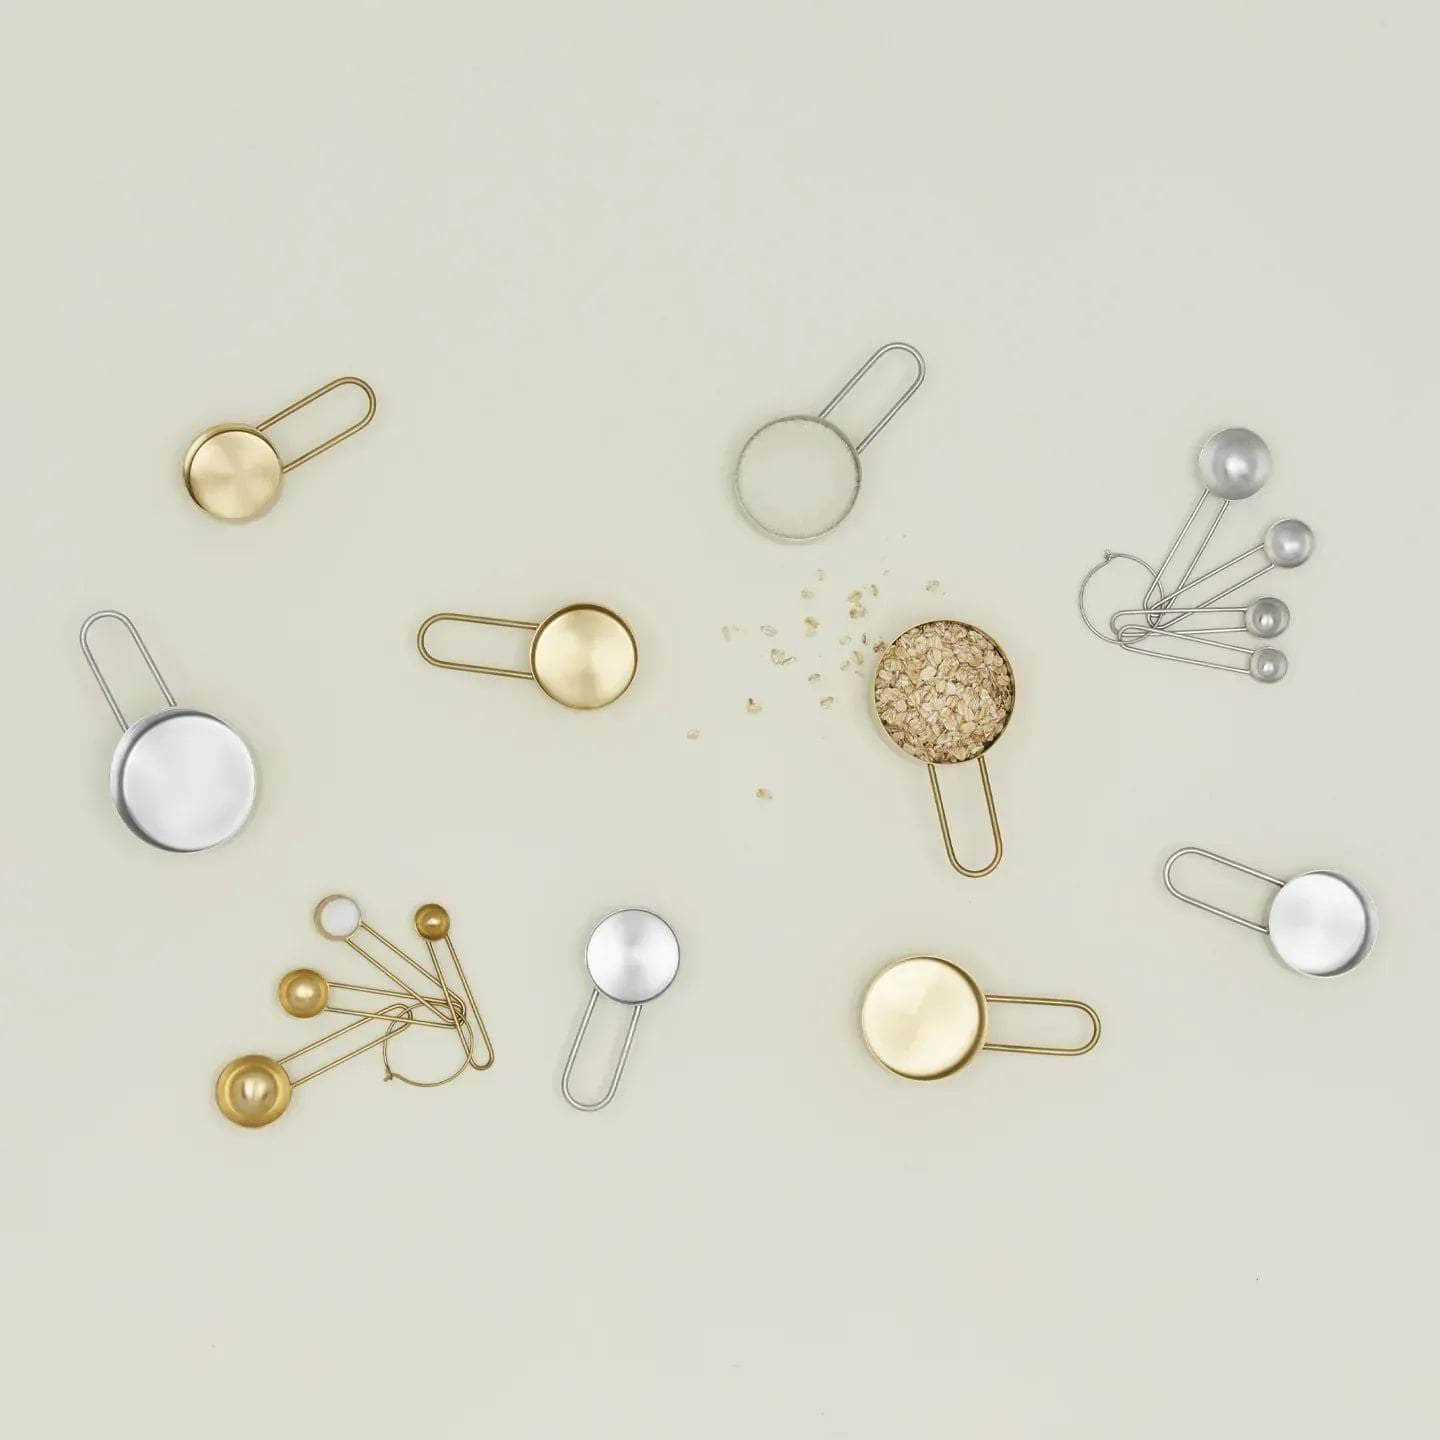 Simple Measuring Spoons - Brass